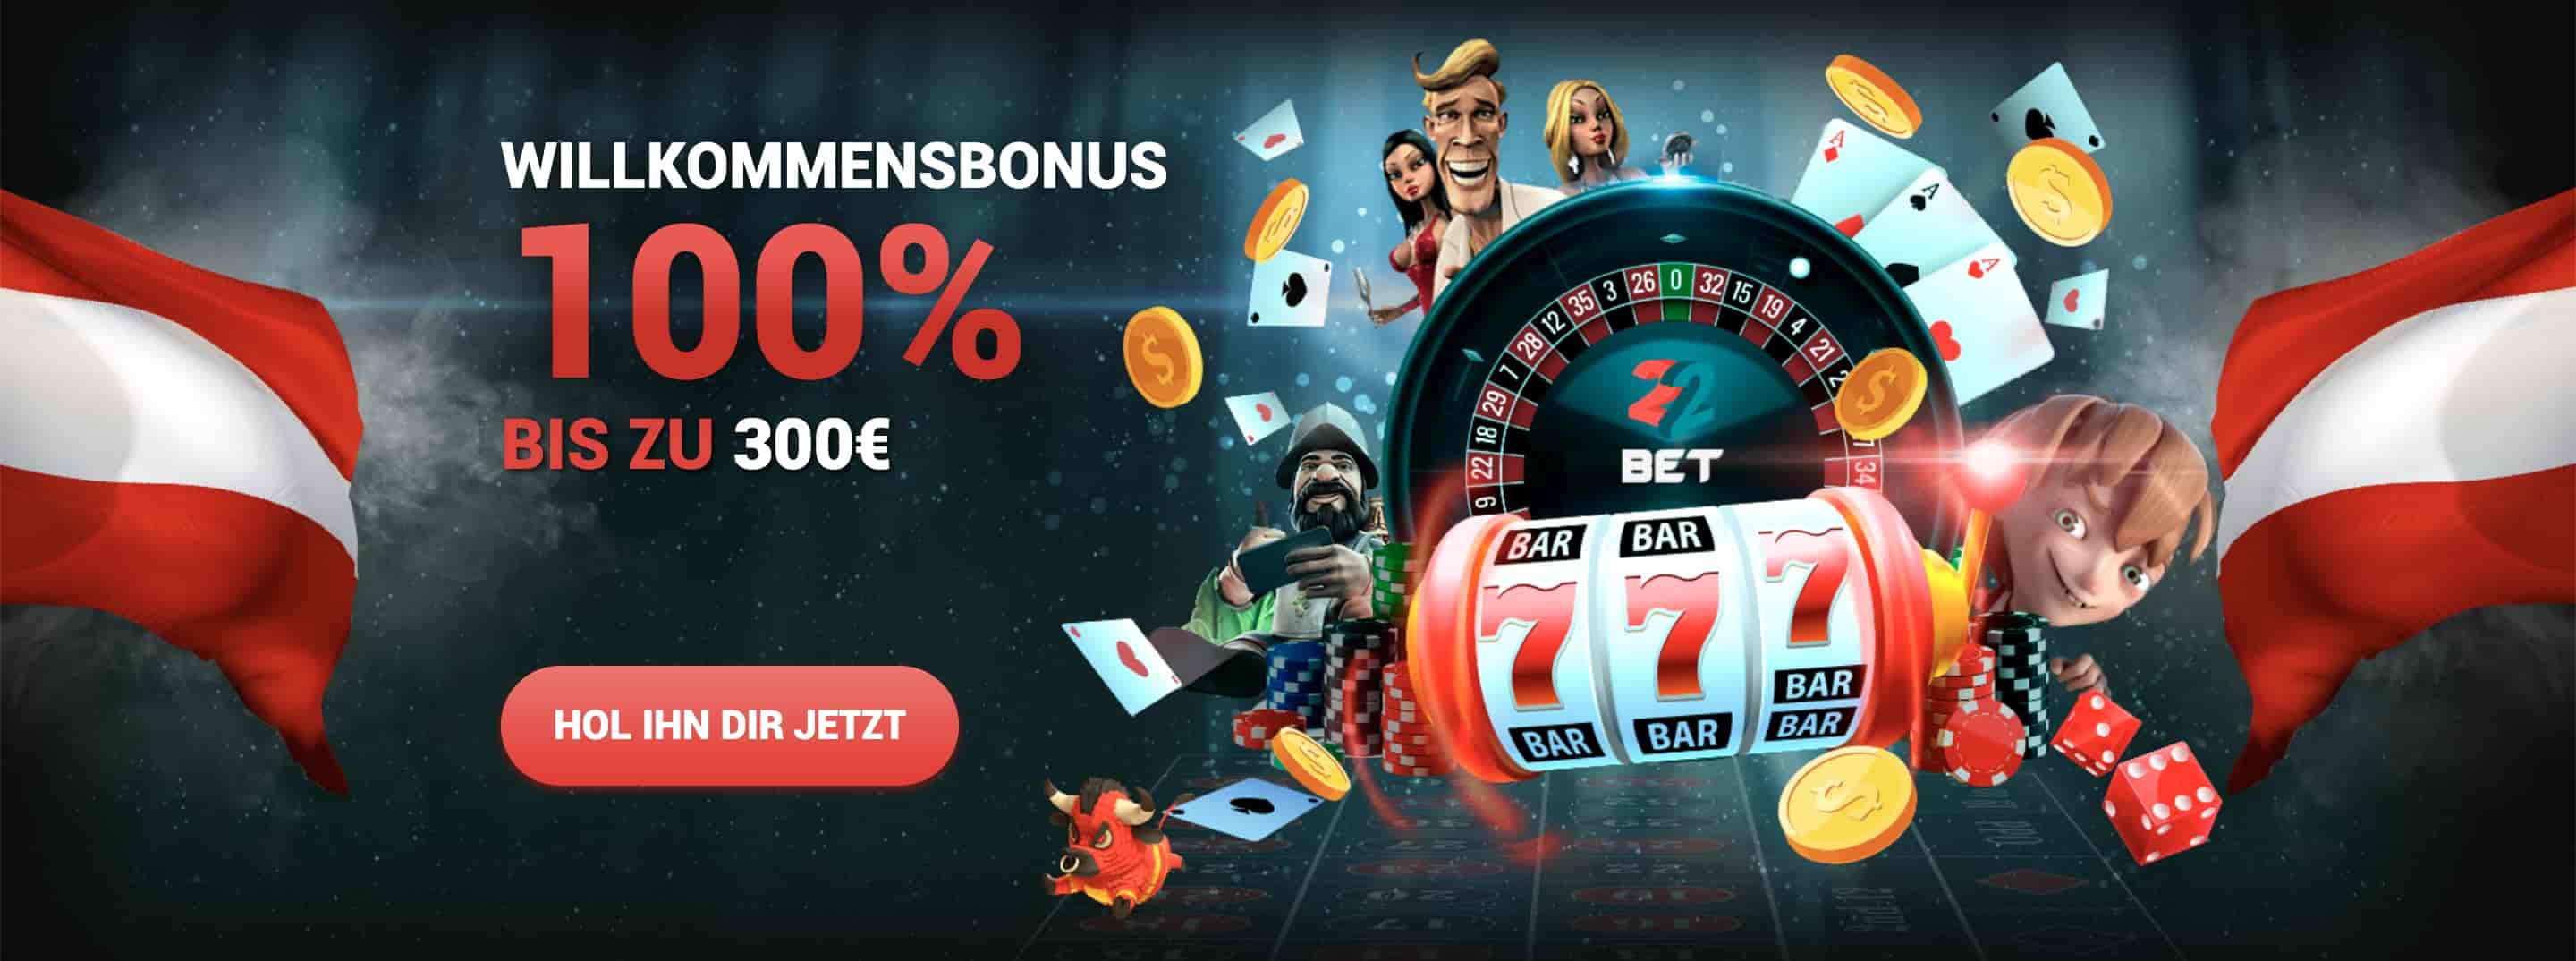 bet90 casino